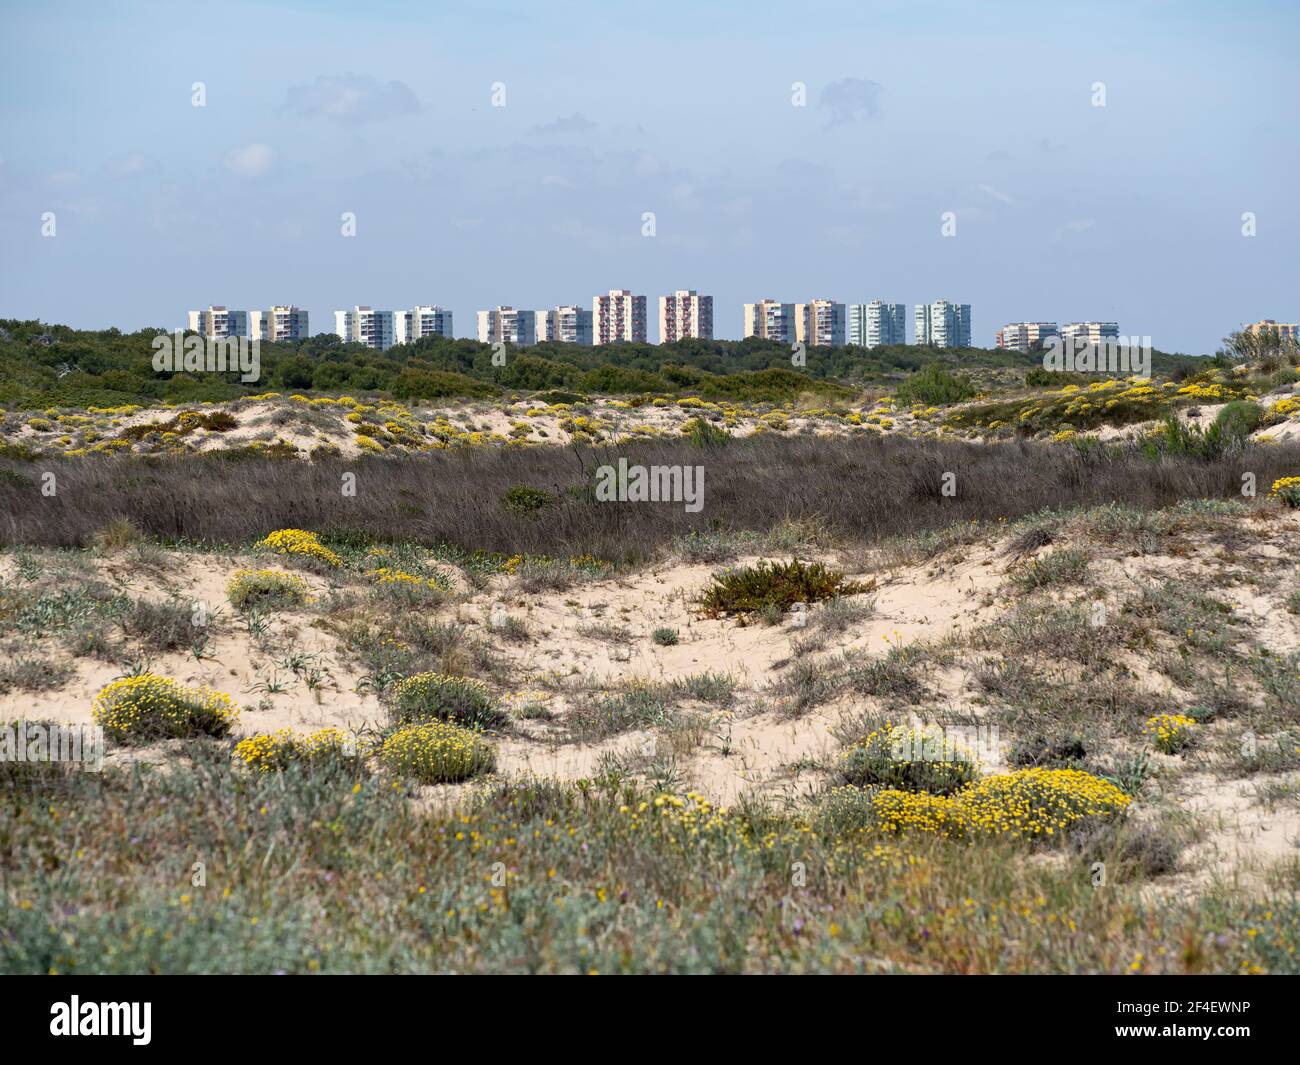 Construction of housing between the dunes of the Albufera de Valencia Natural Park. Stock Photo